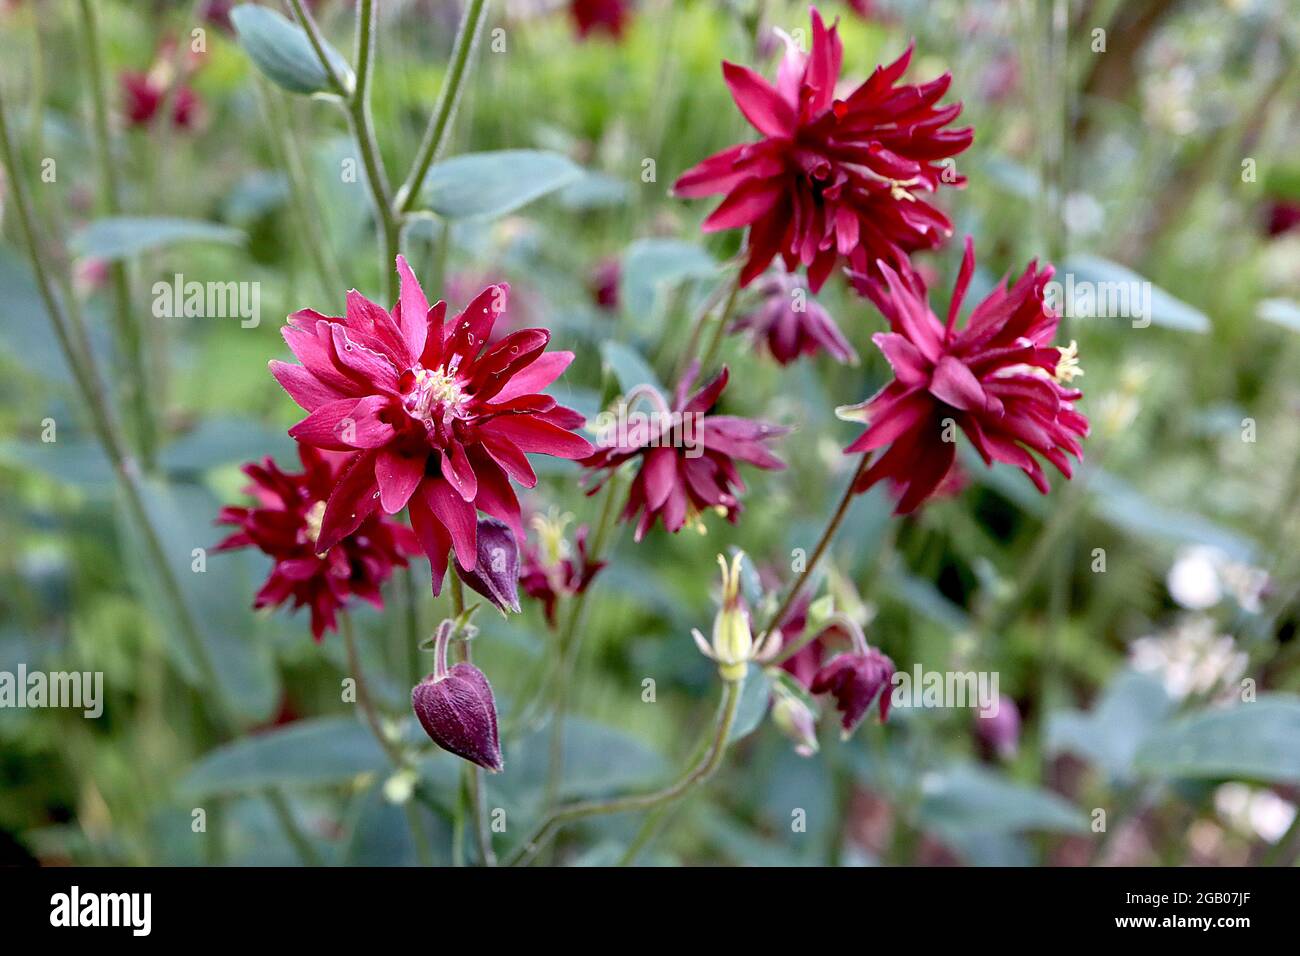 Aquilegia vulgaris var. stellata ‘Bordeaux Barlow’ Columbine / Granny’s bonnet Bordeaux Barlow - spurless double deep red flowers, June, England, UK Stock Photo